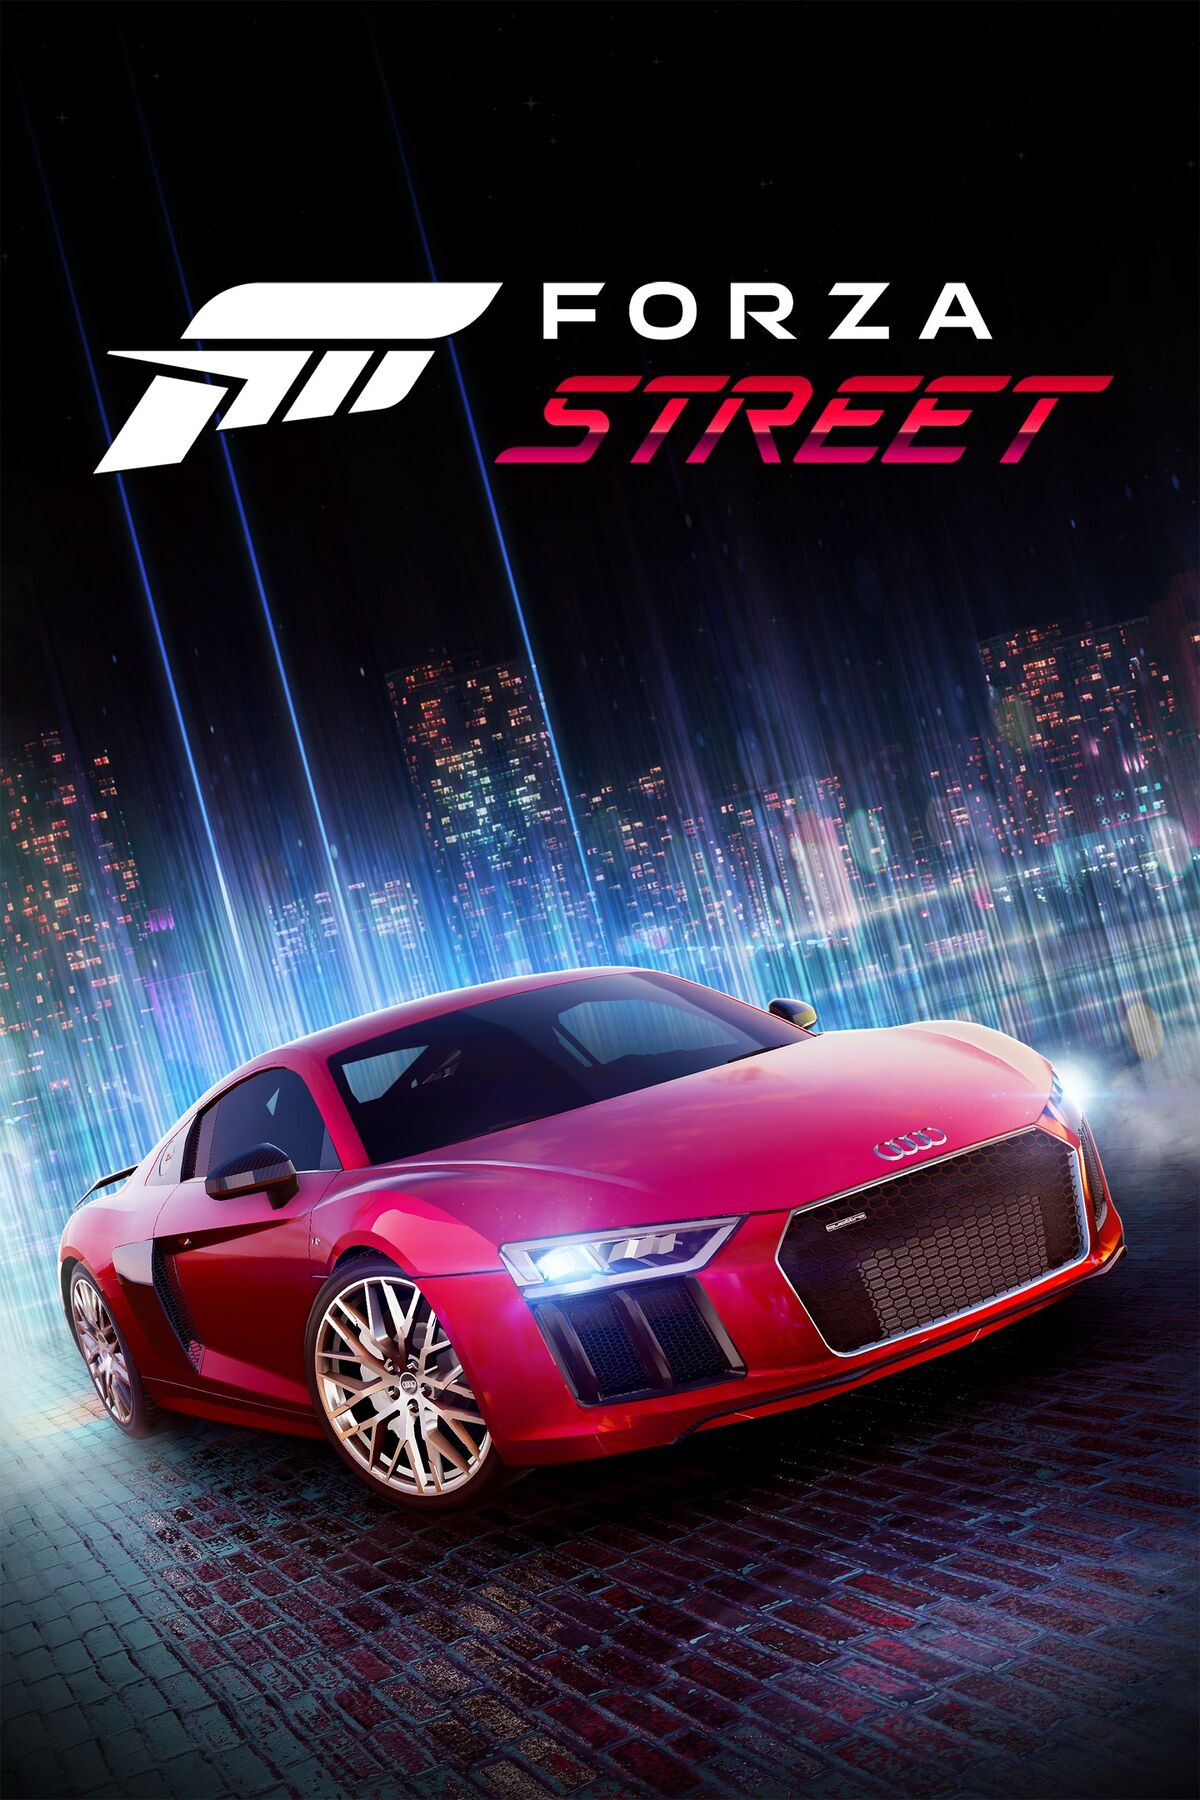 Forza Street chega ao Android e iPhone; saiba baixar grátis e jogar